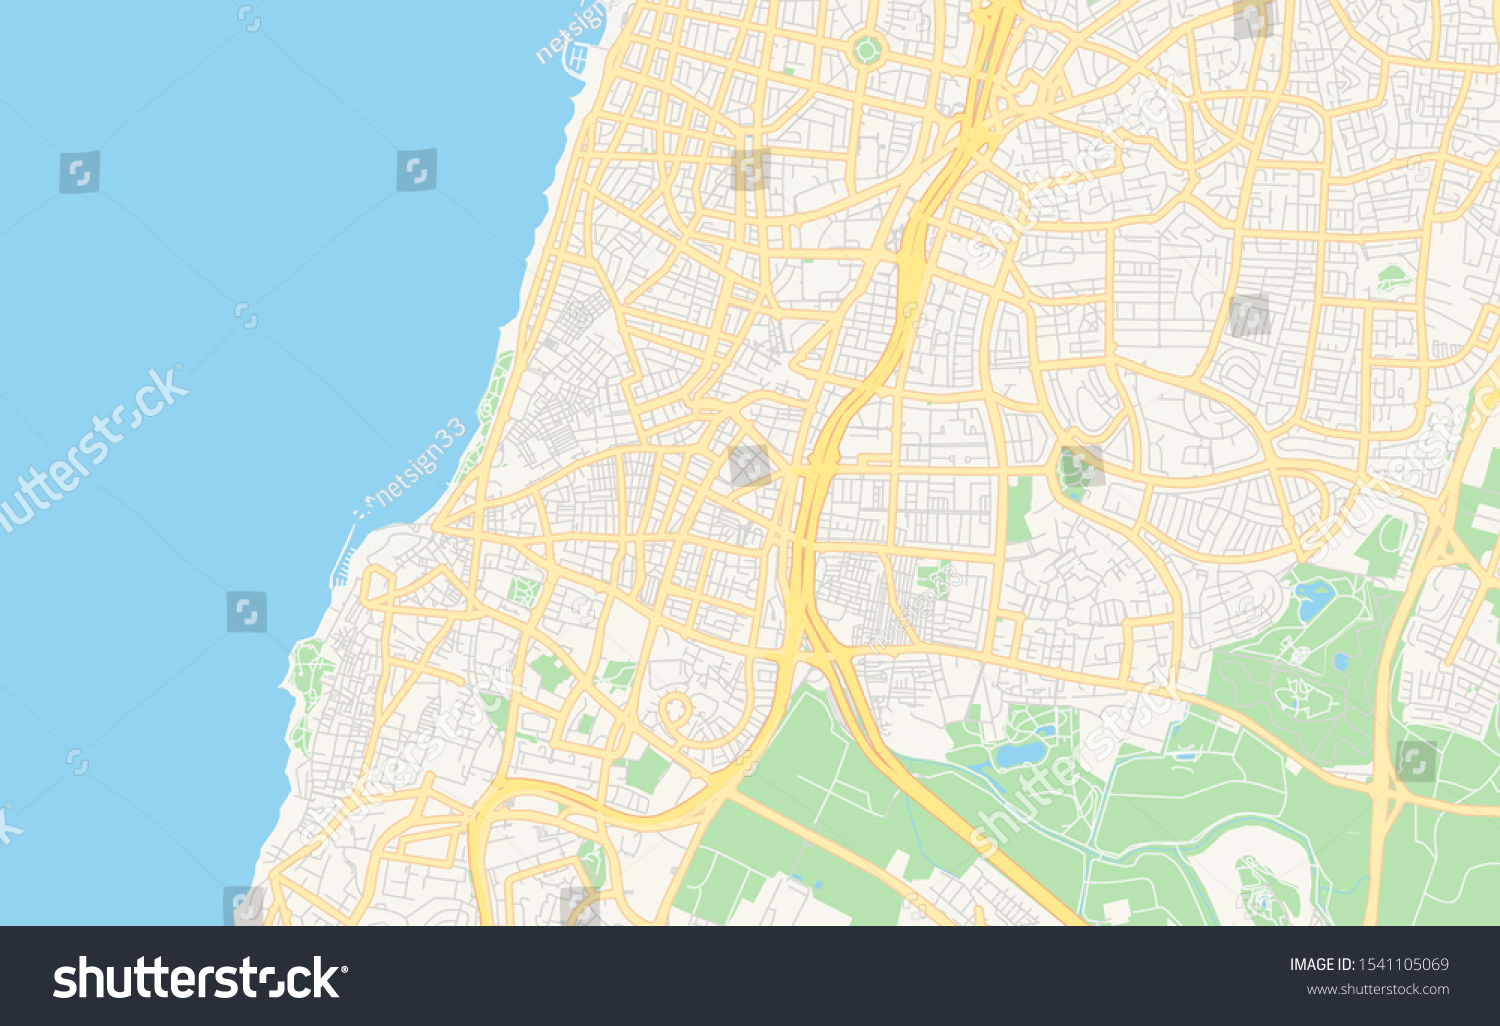 Stock Vector Printable Street Map Of Bnei Brak District Tel Aviv Israel Map Template For Business Use 1541105069 